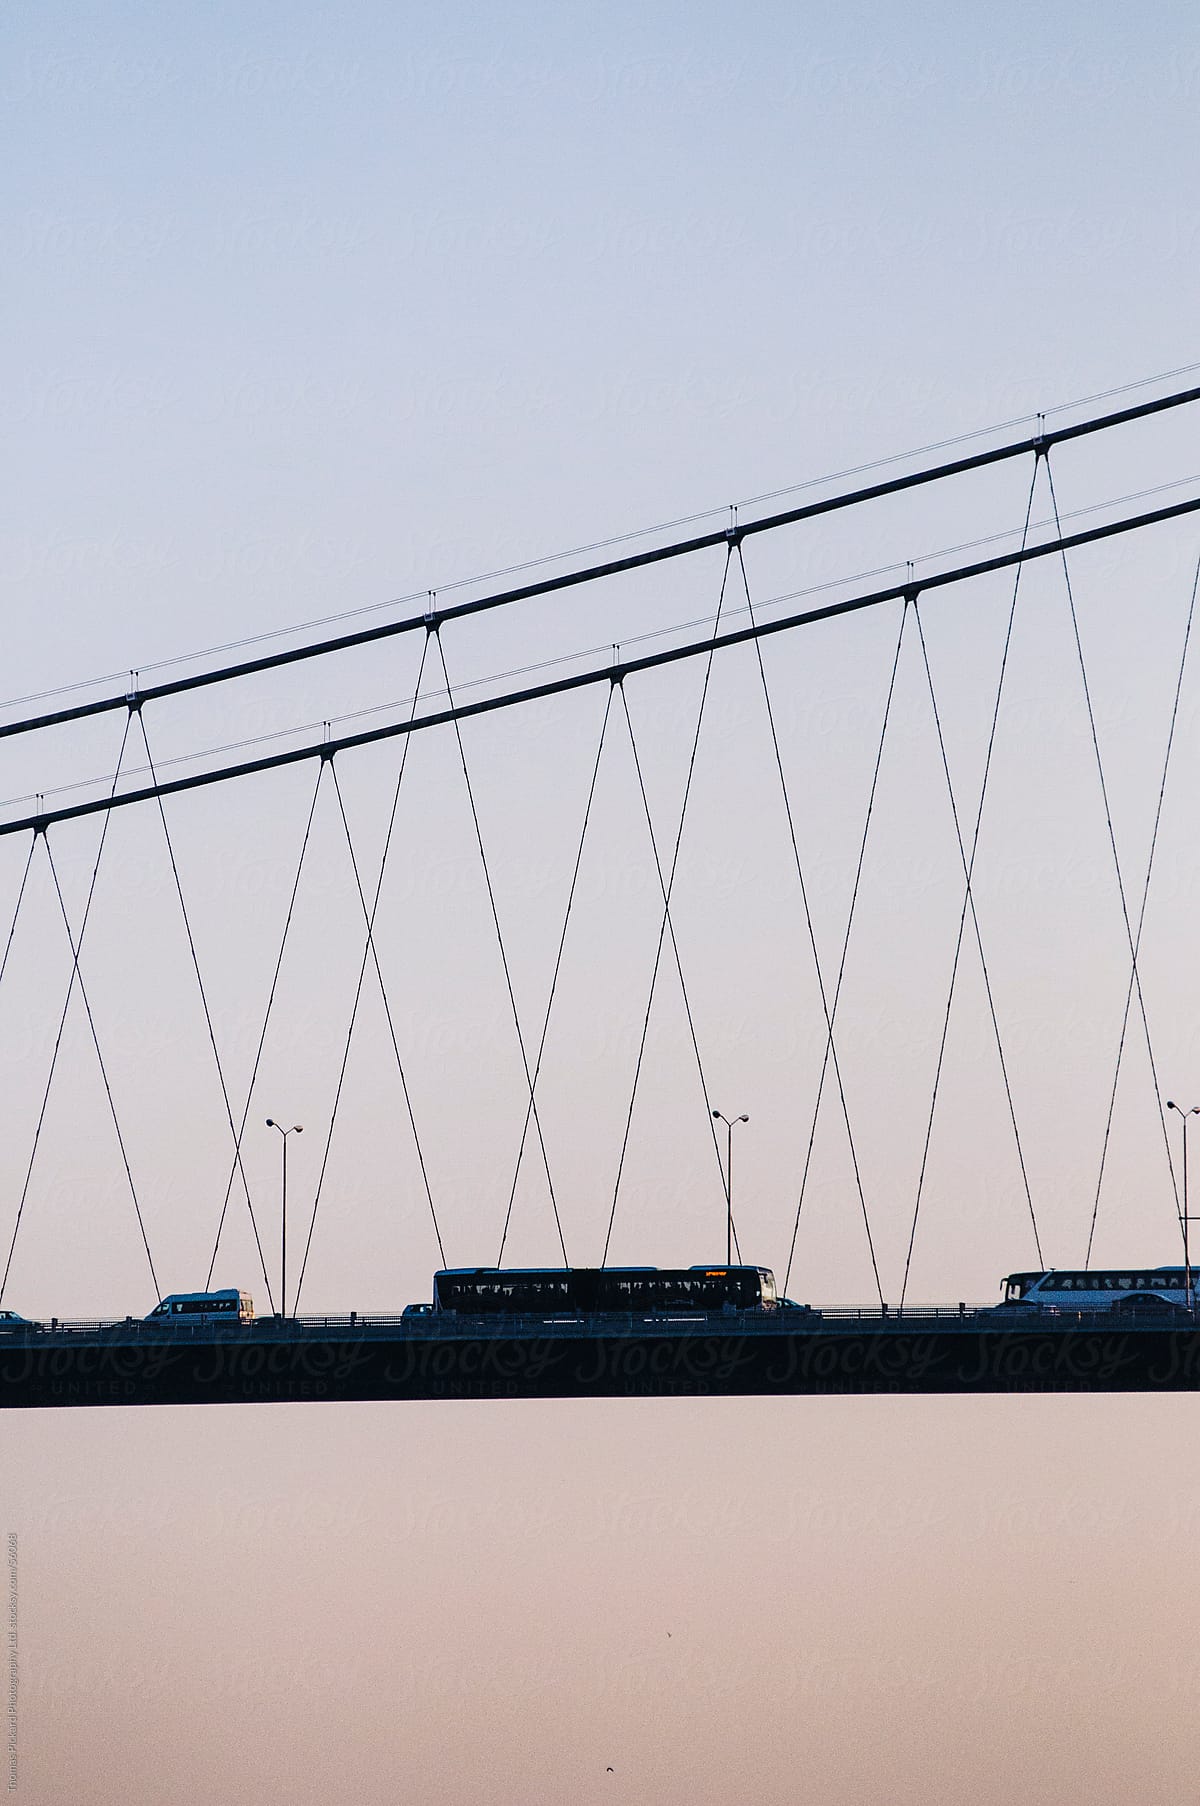 Vehicles crossing a bridge, Istanbul Turkey.